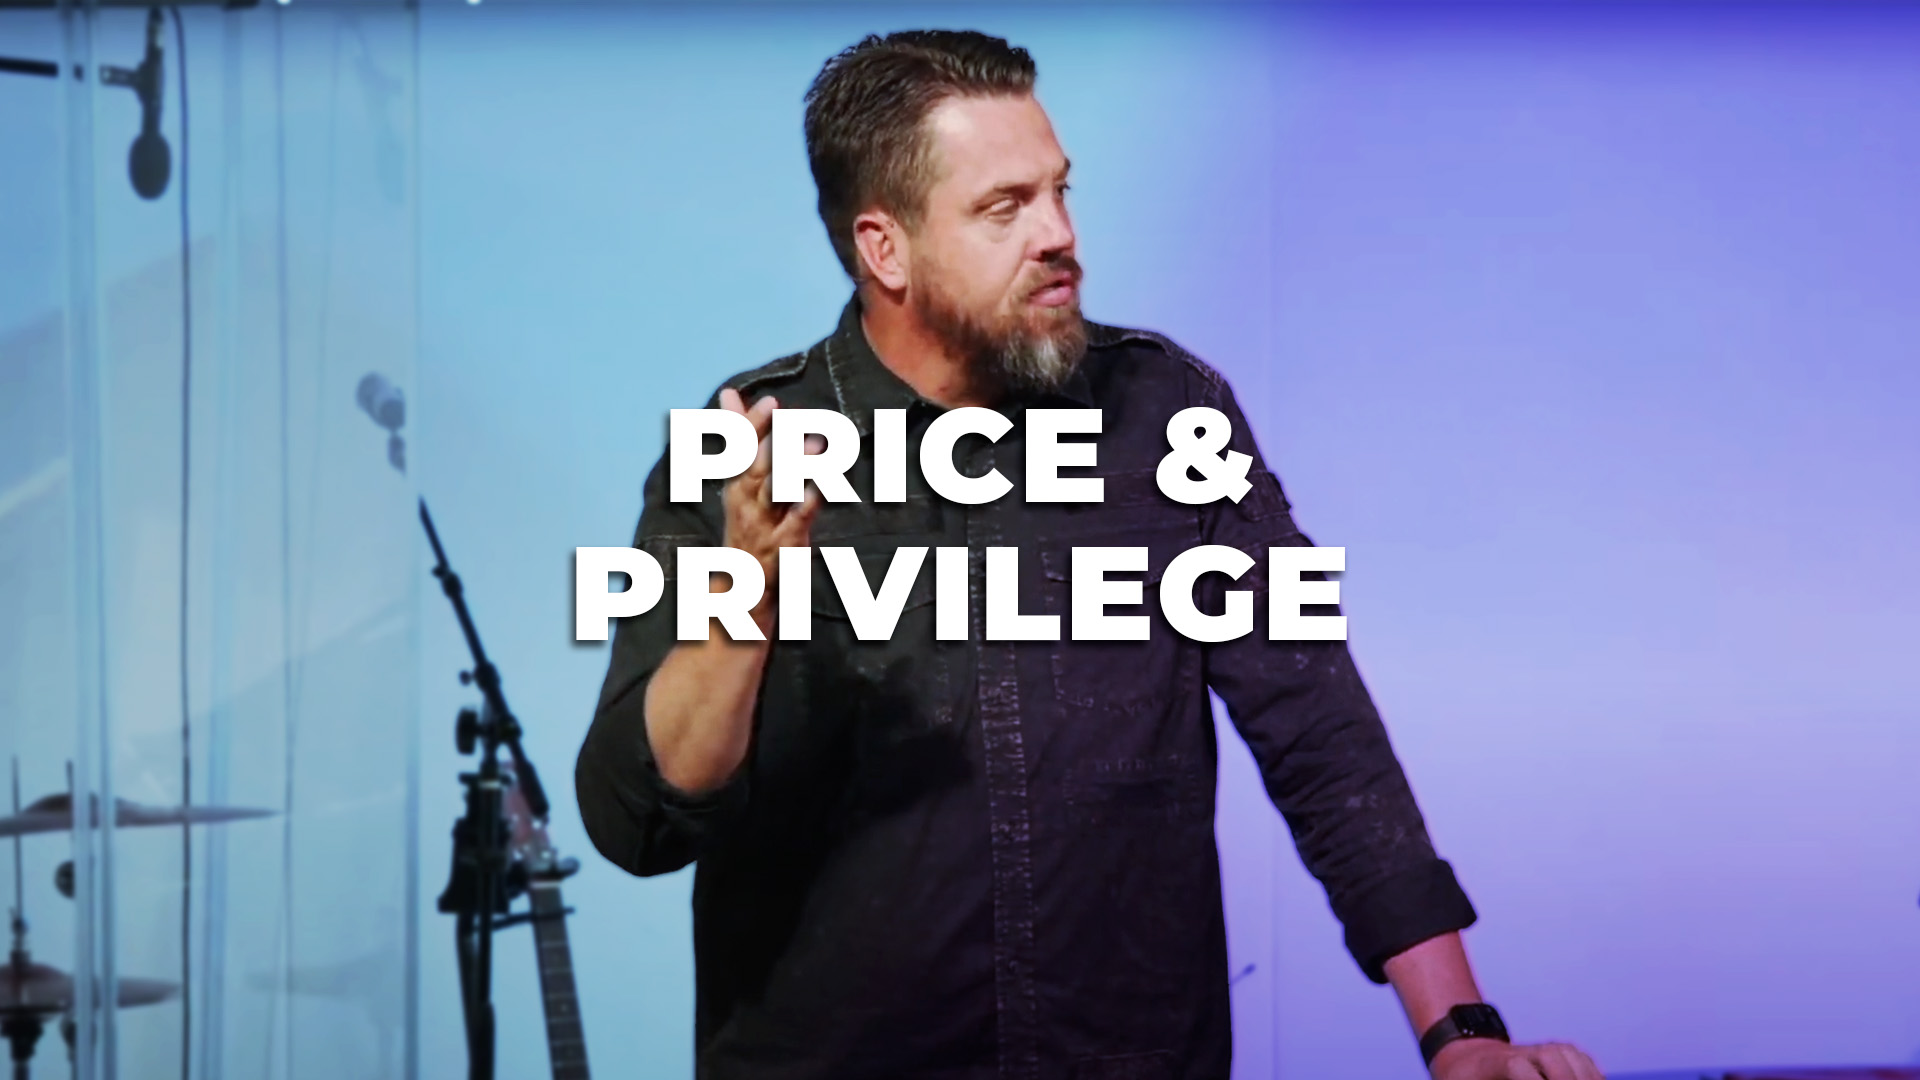 The Price and Privilege